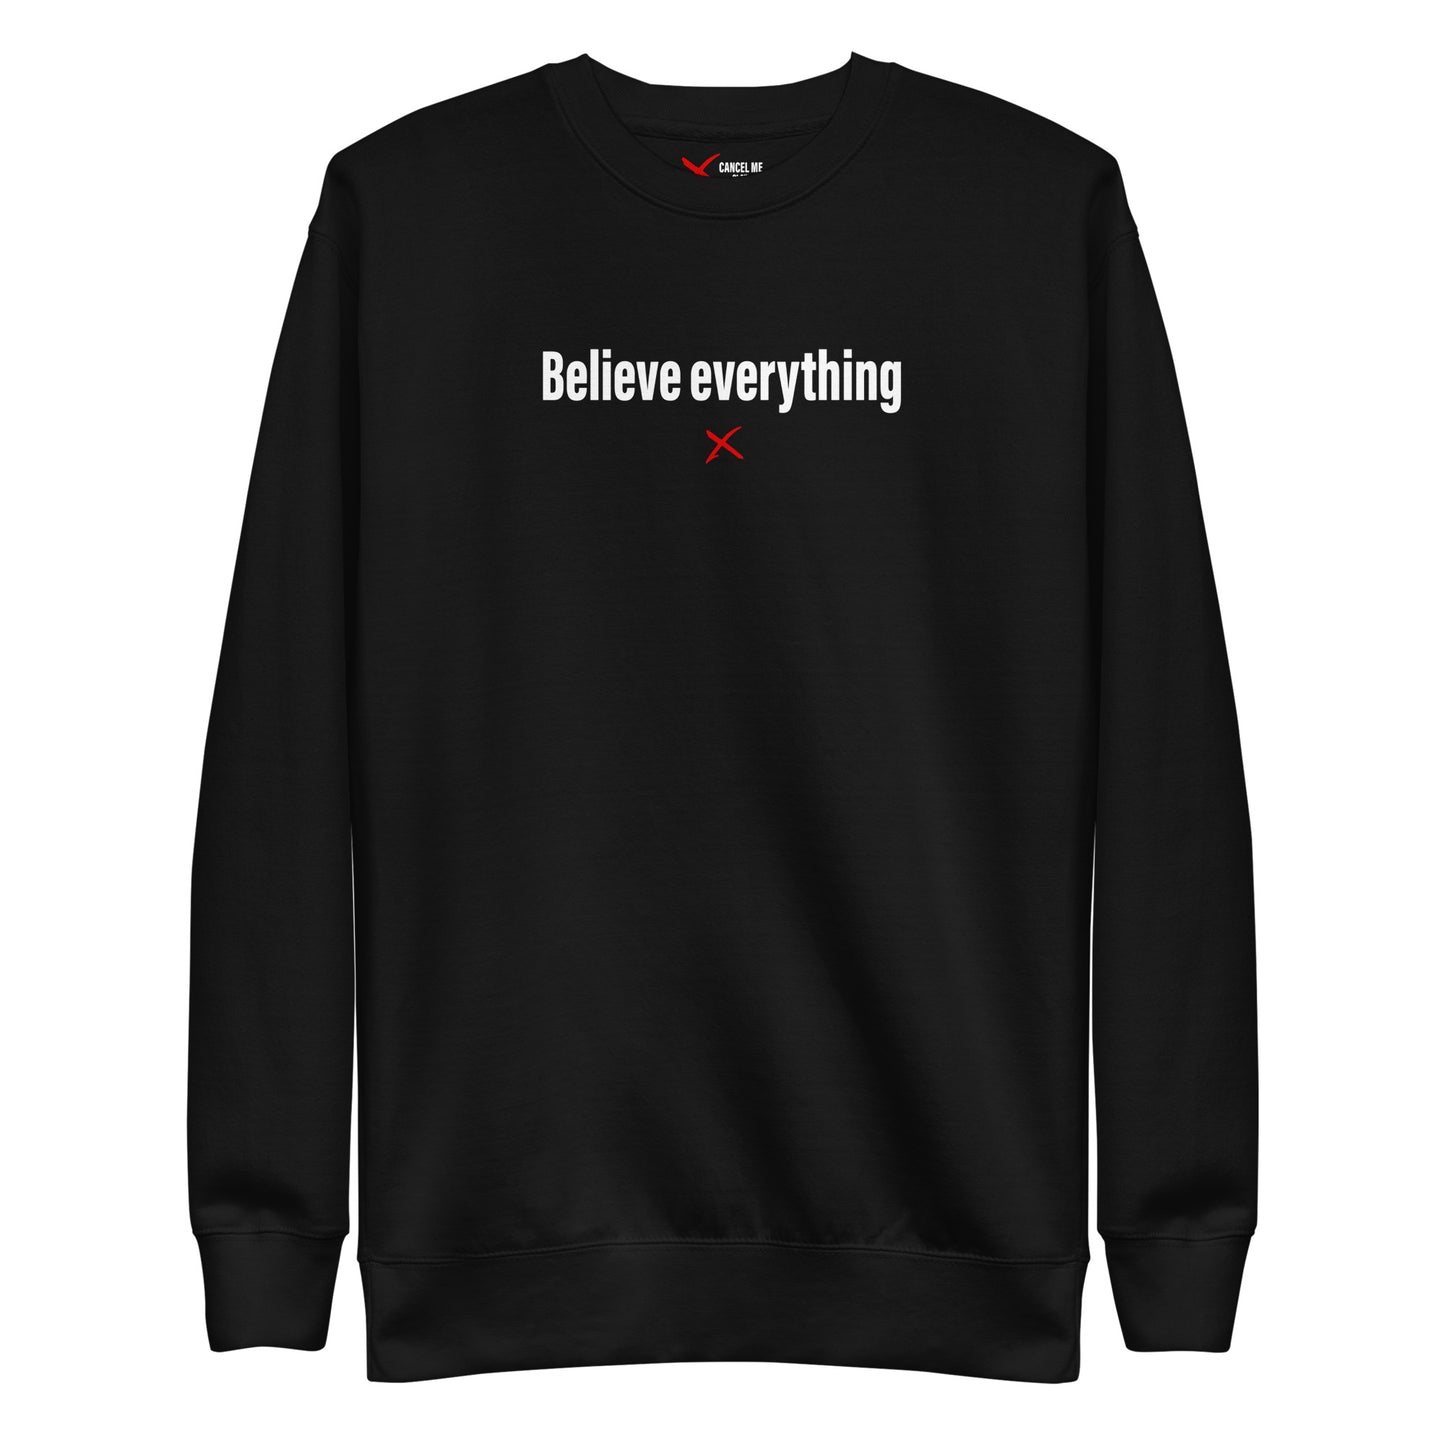 Believe everything - Sweatshirt